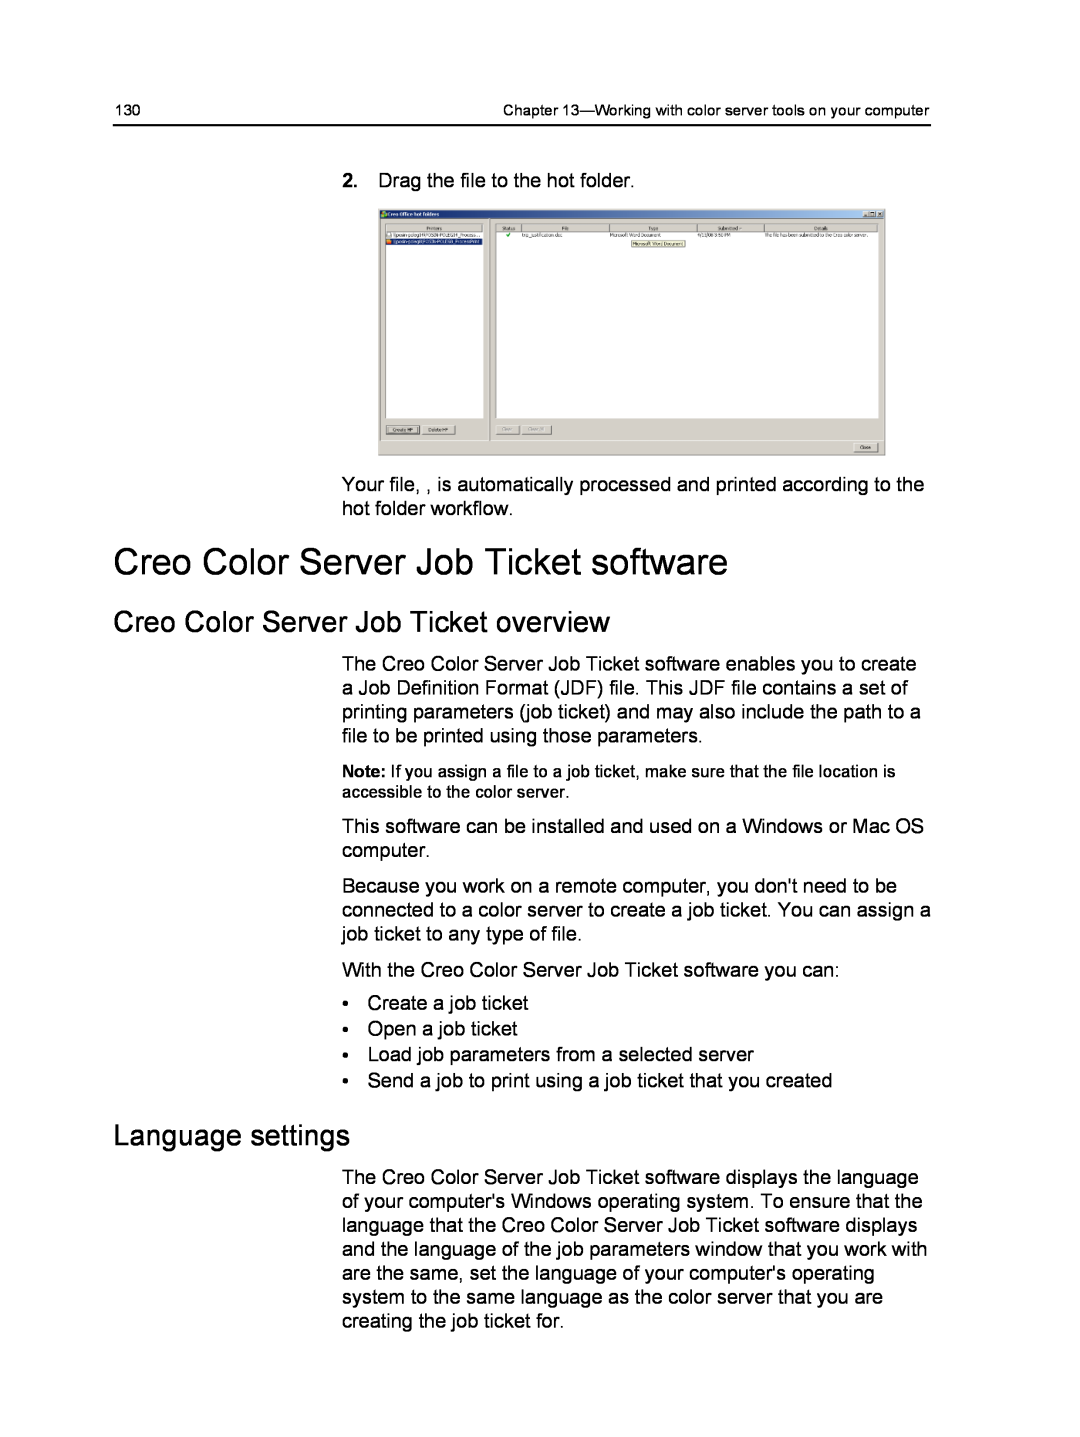 Xerox 560, 550 manual Creo Color Server Job Ticket software, Creo Color Server Job Ticket overview, Language settings 